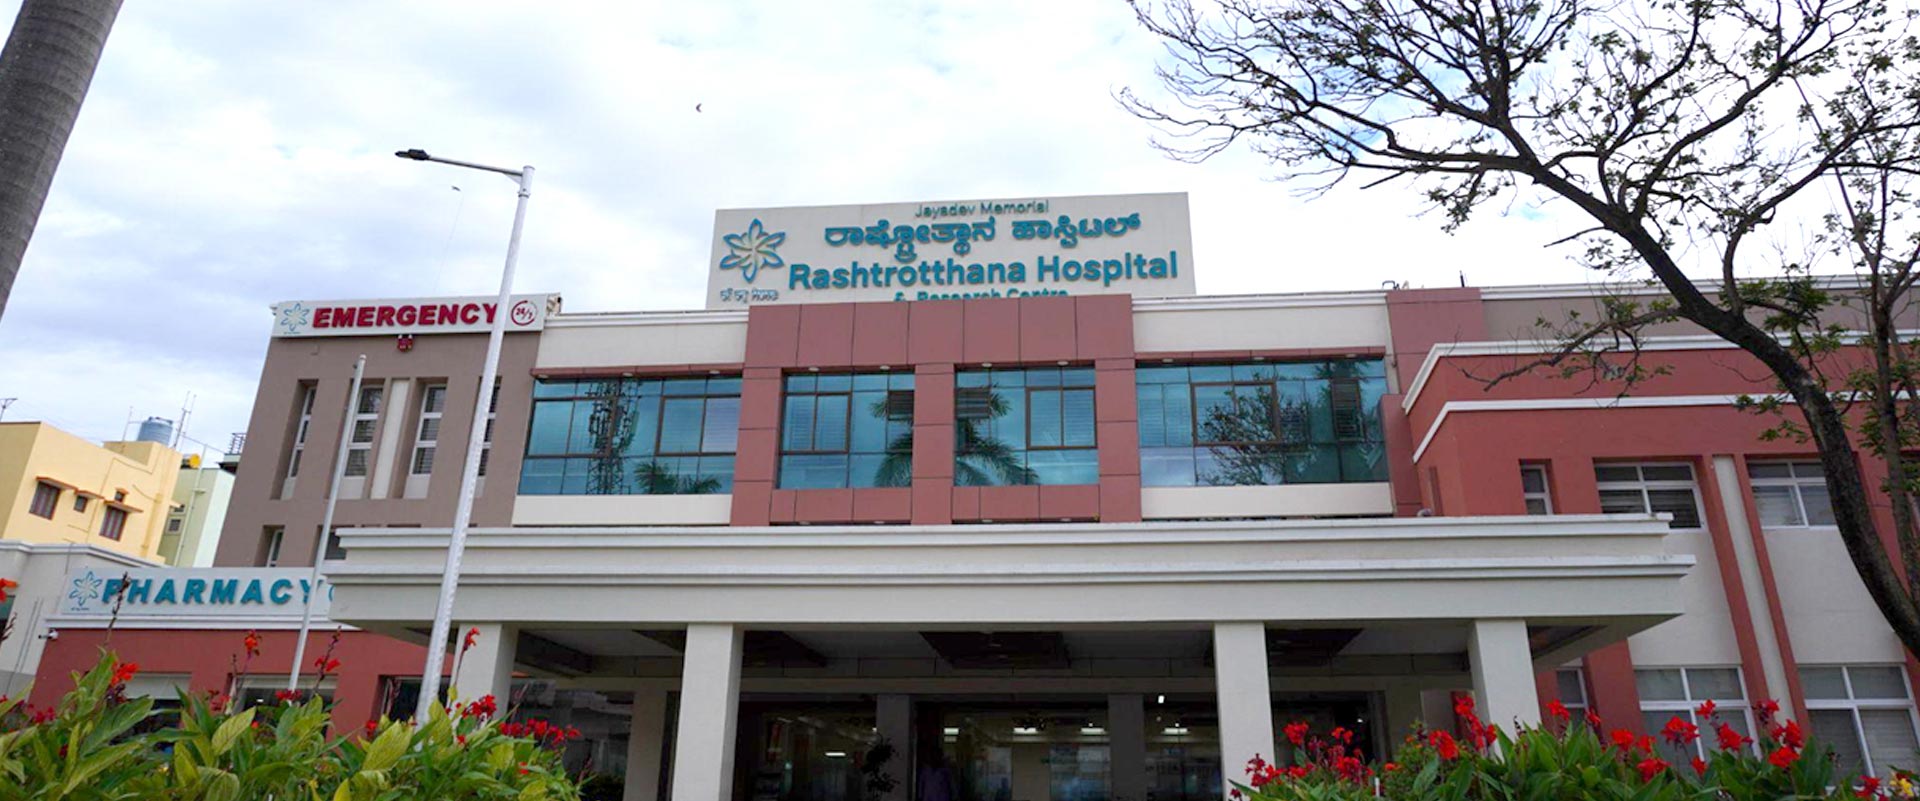 Best General Medicine Hospital in bangalore